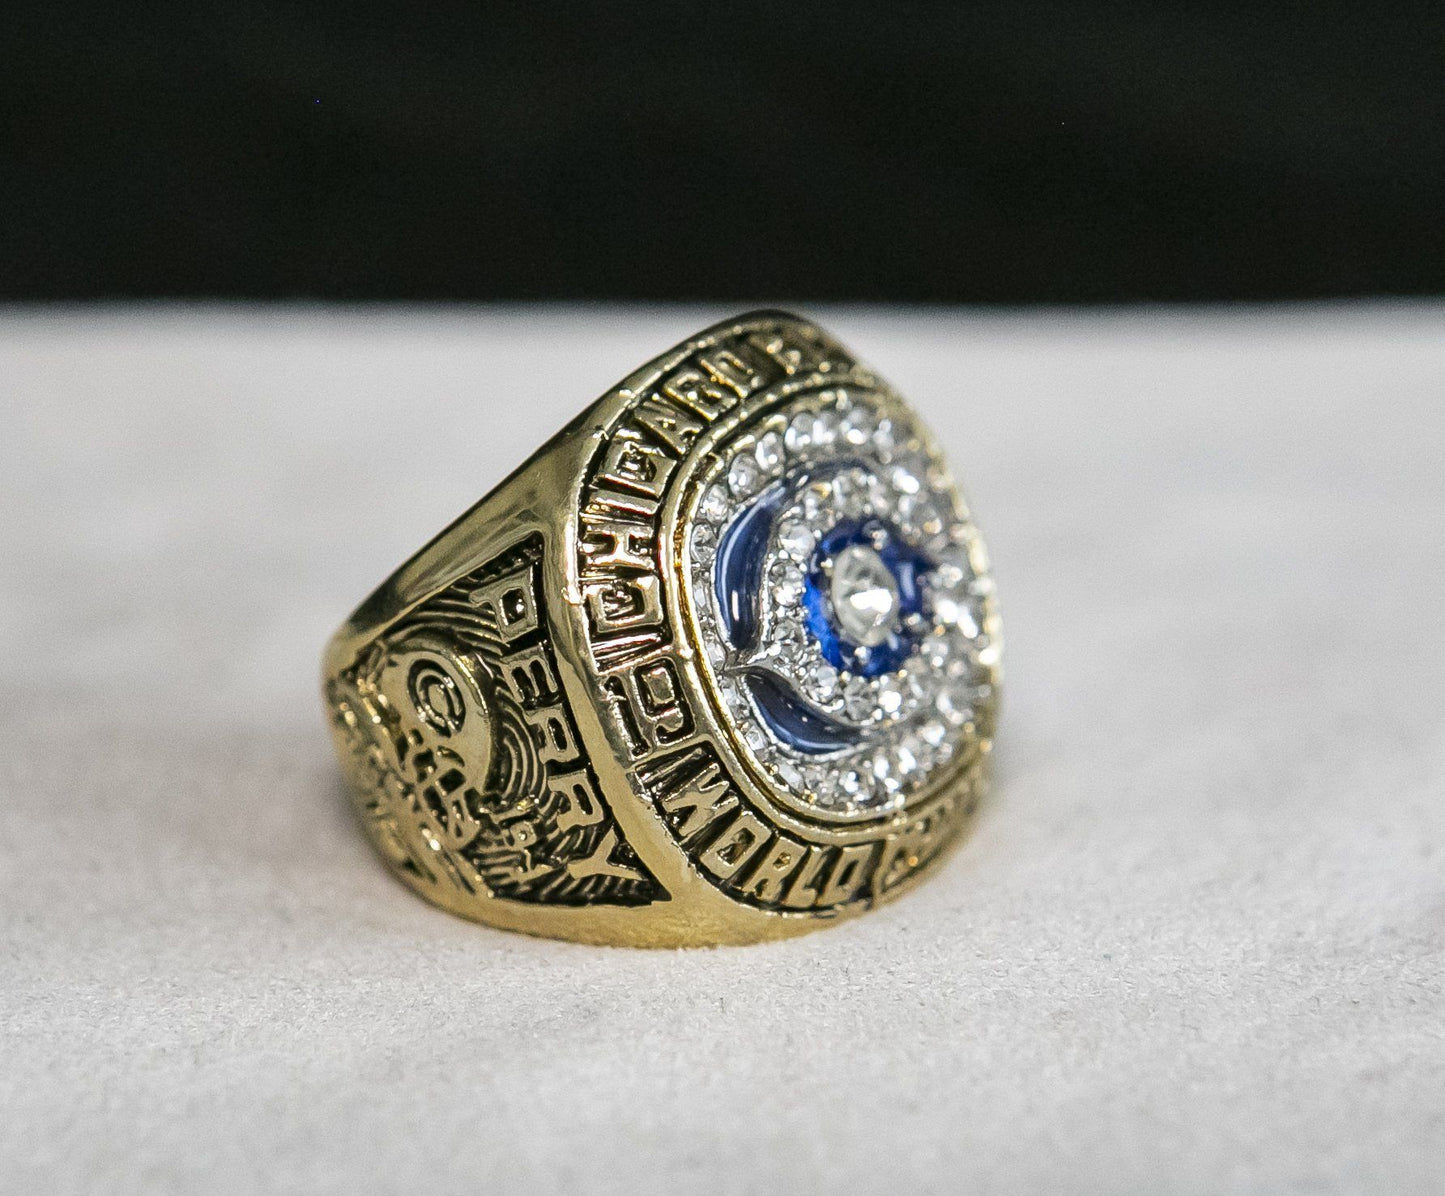 chicago bears championship rings